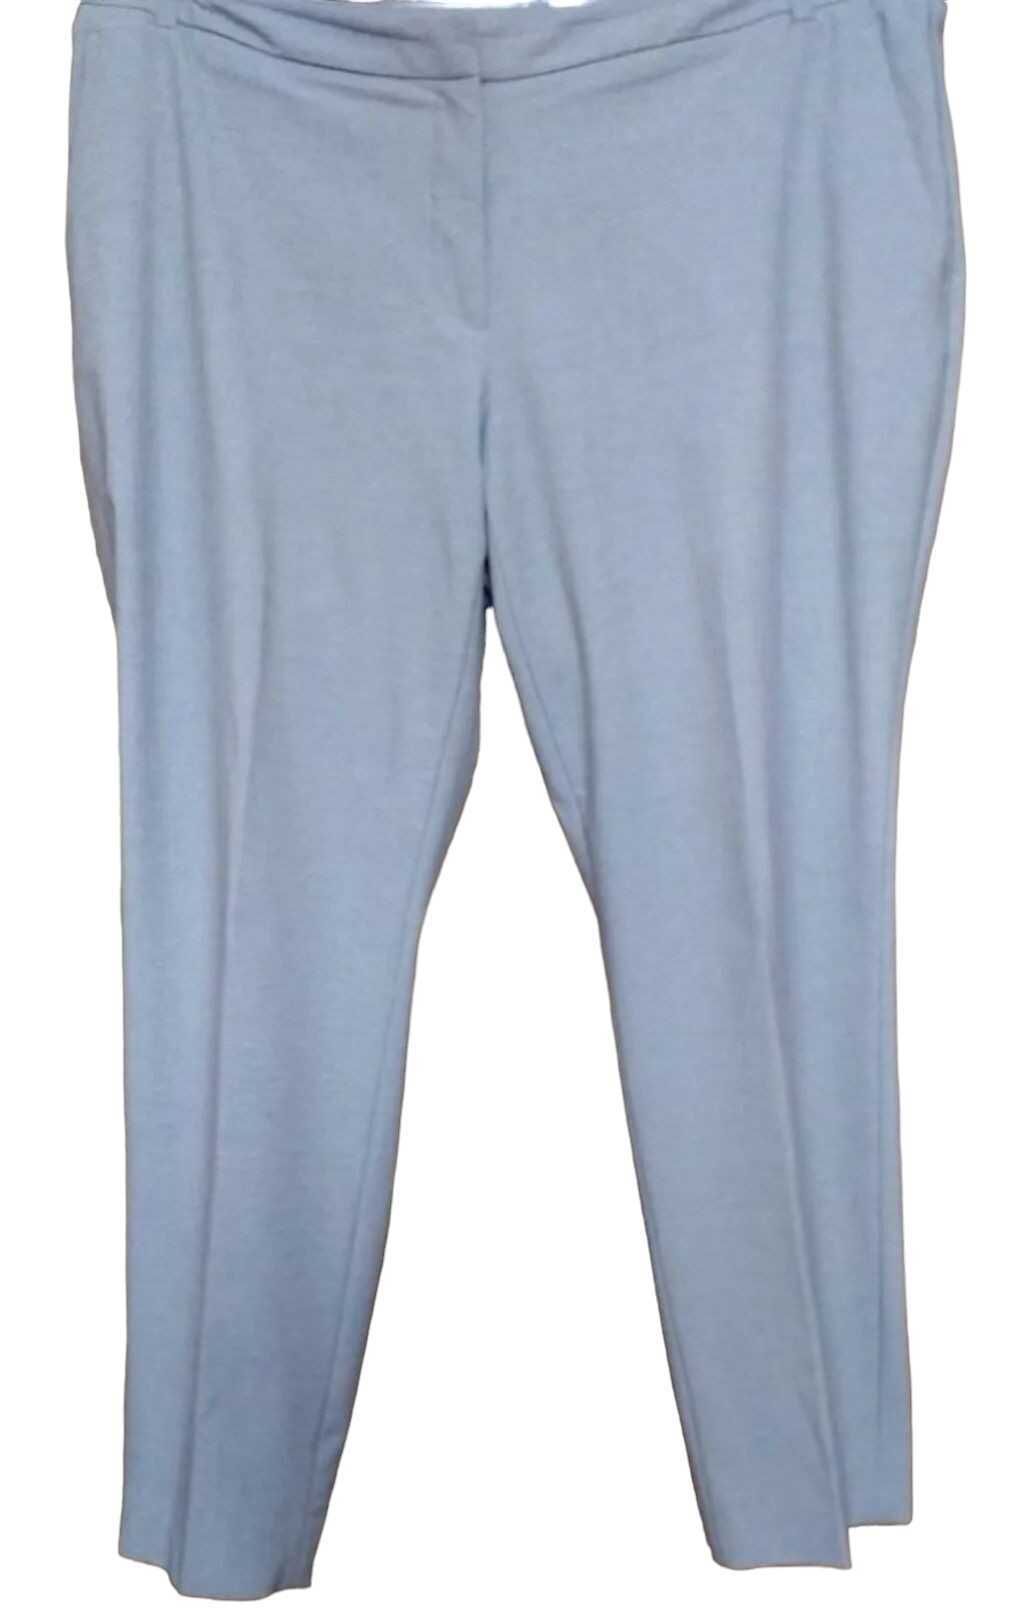 Елегантен дамски панталон H&M, 46 (XL), Сив